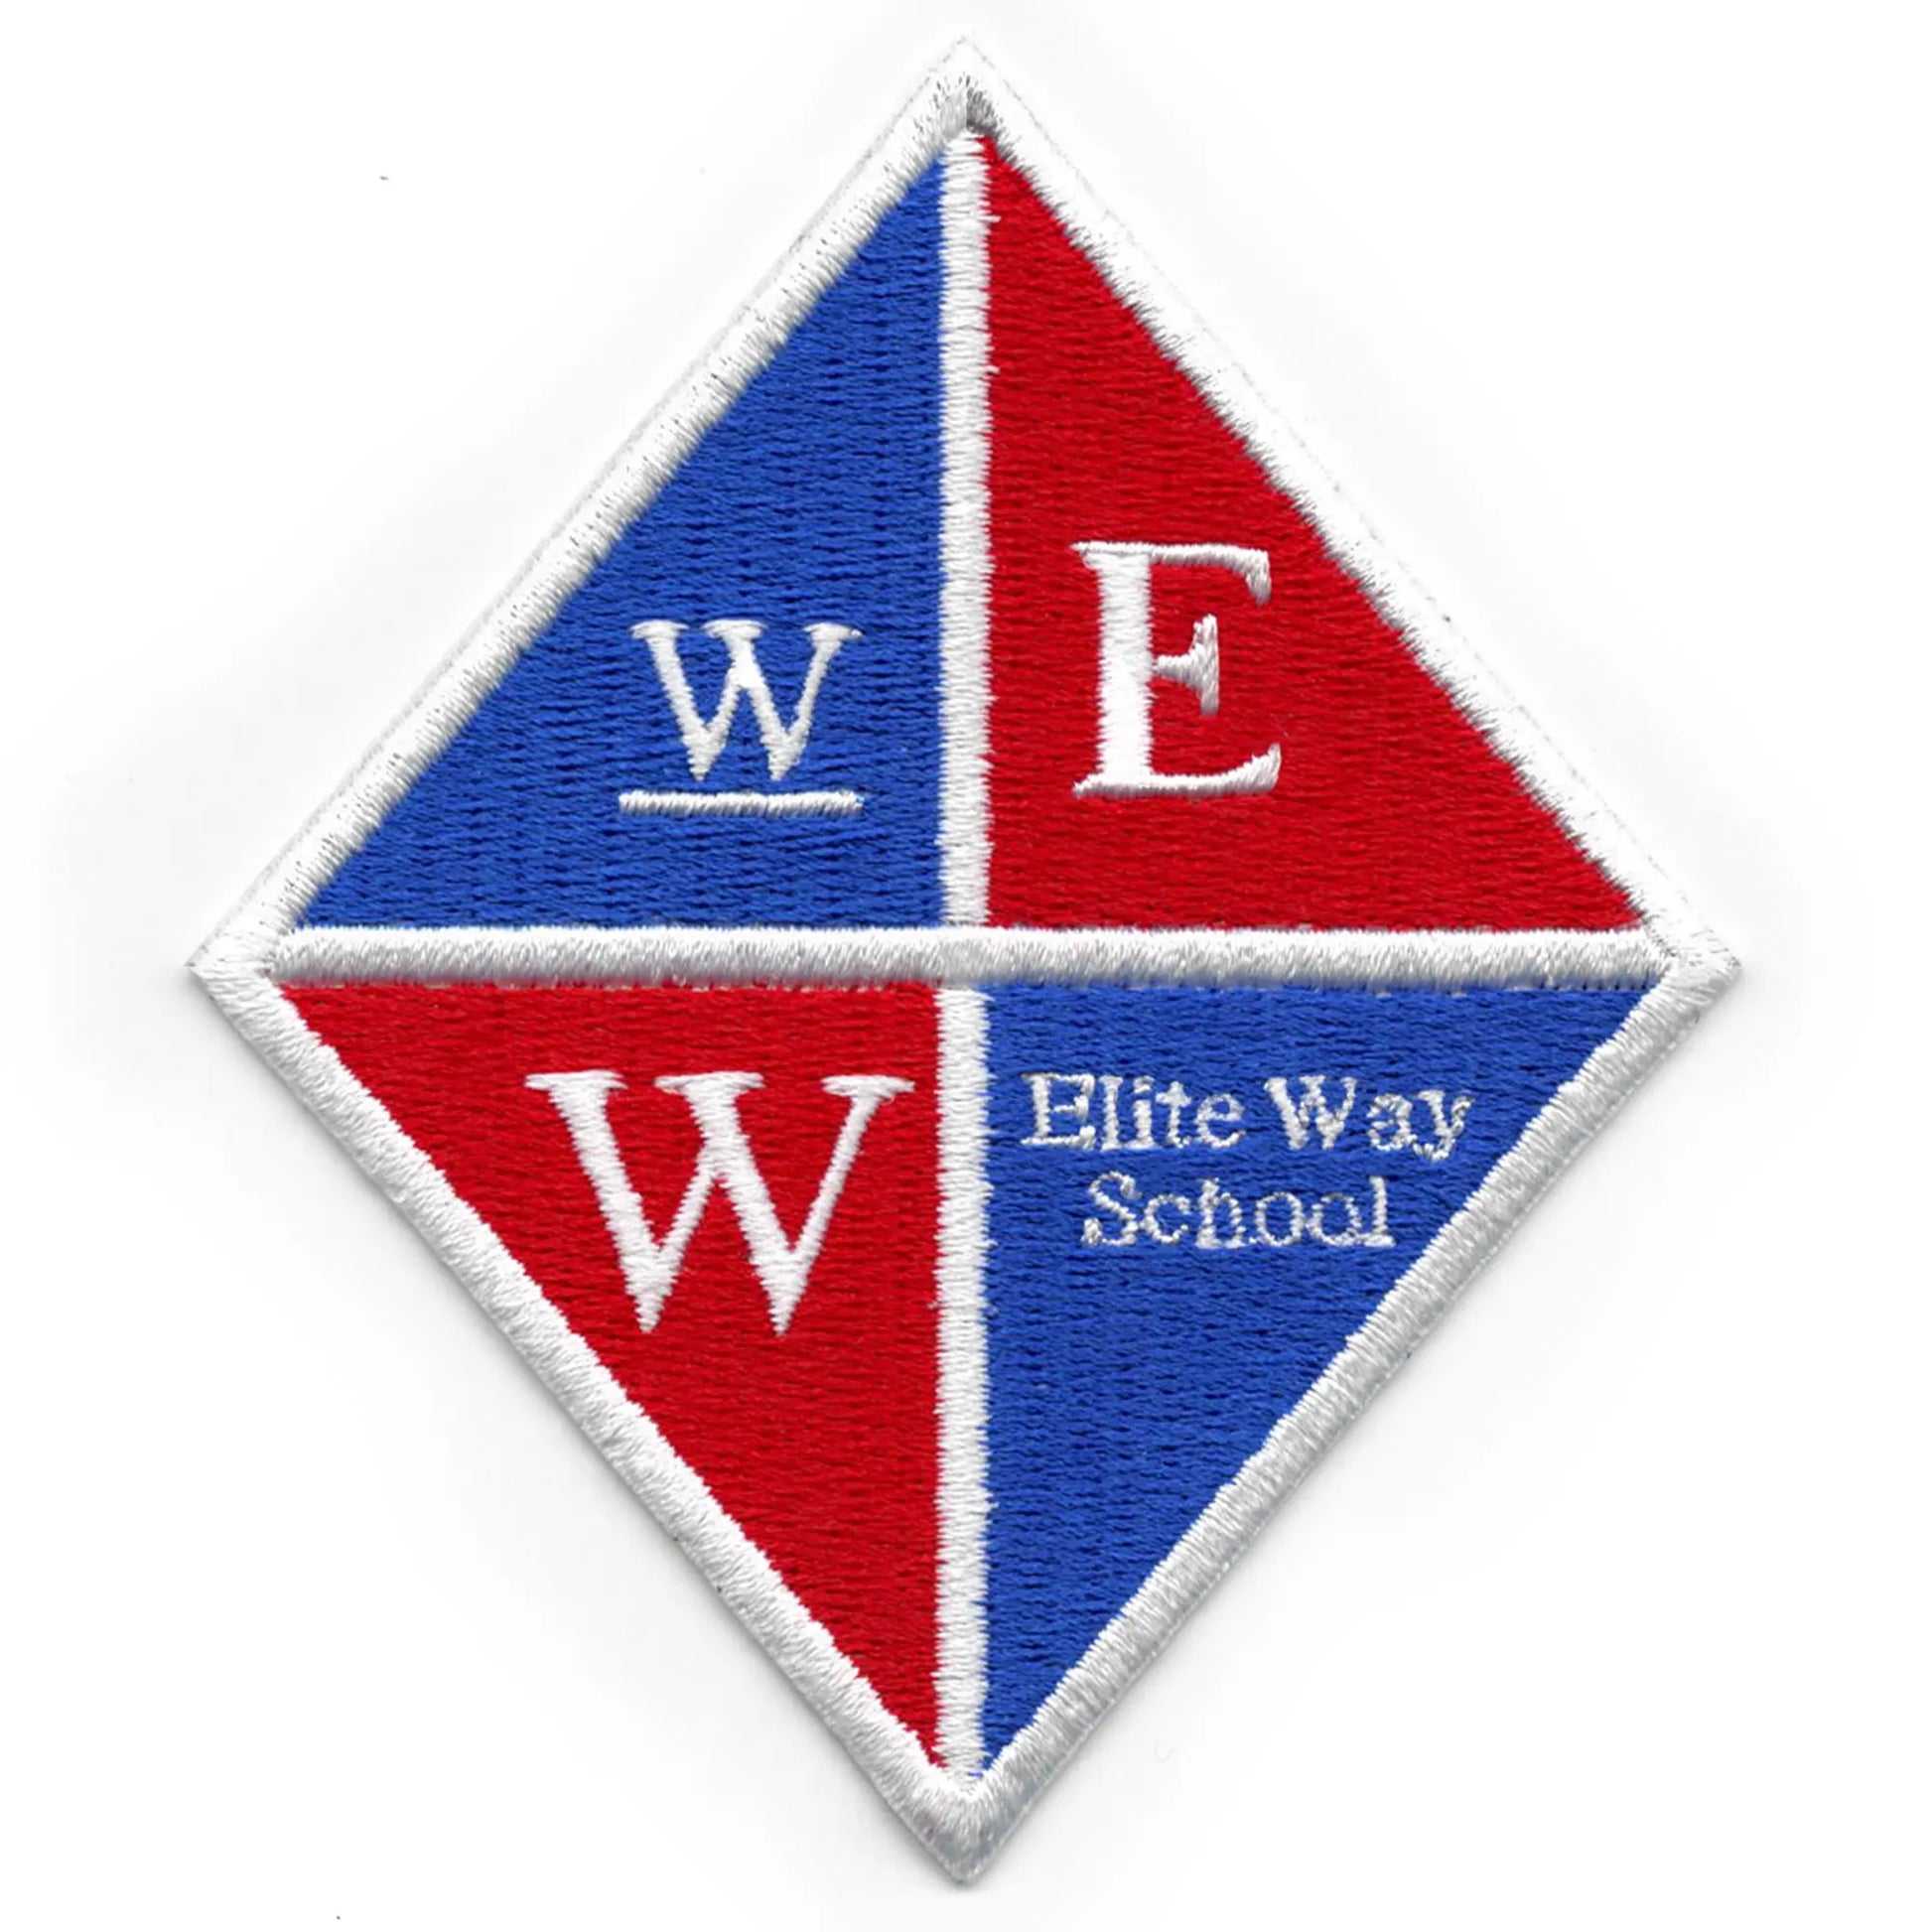 Elite Way School Emblem Patch Uniform Hispanic Telenovela Embroidered Iron On